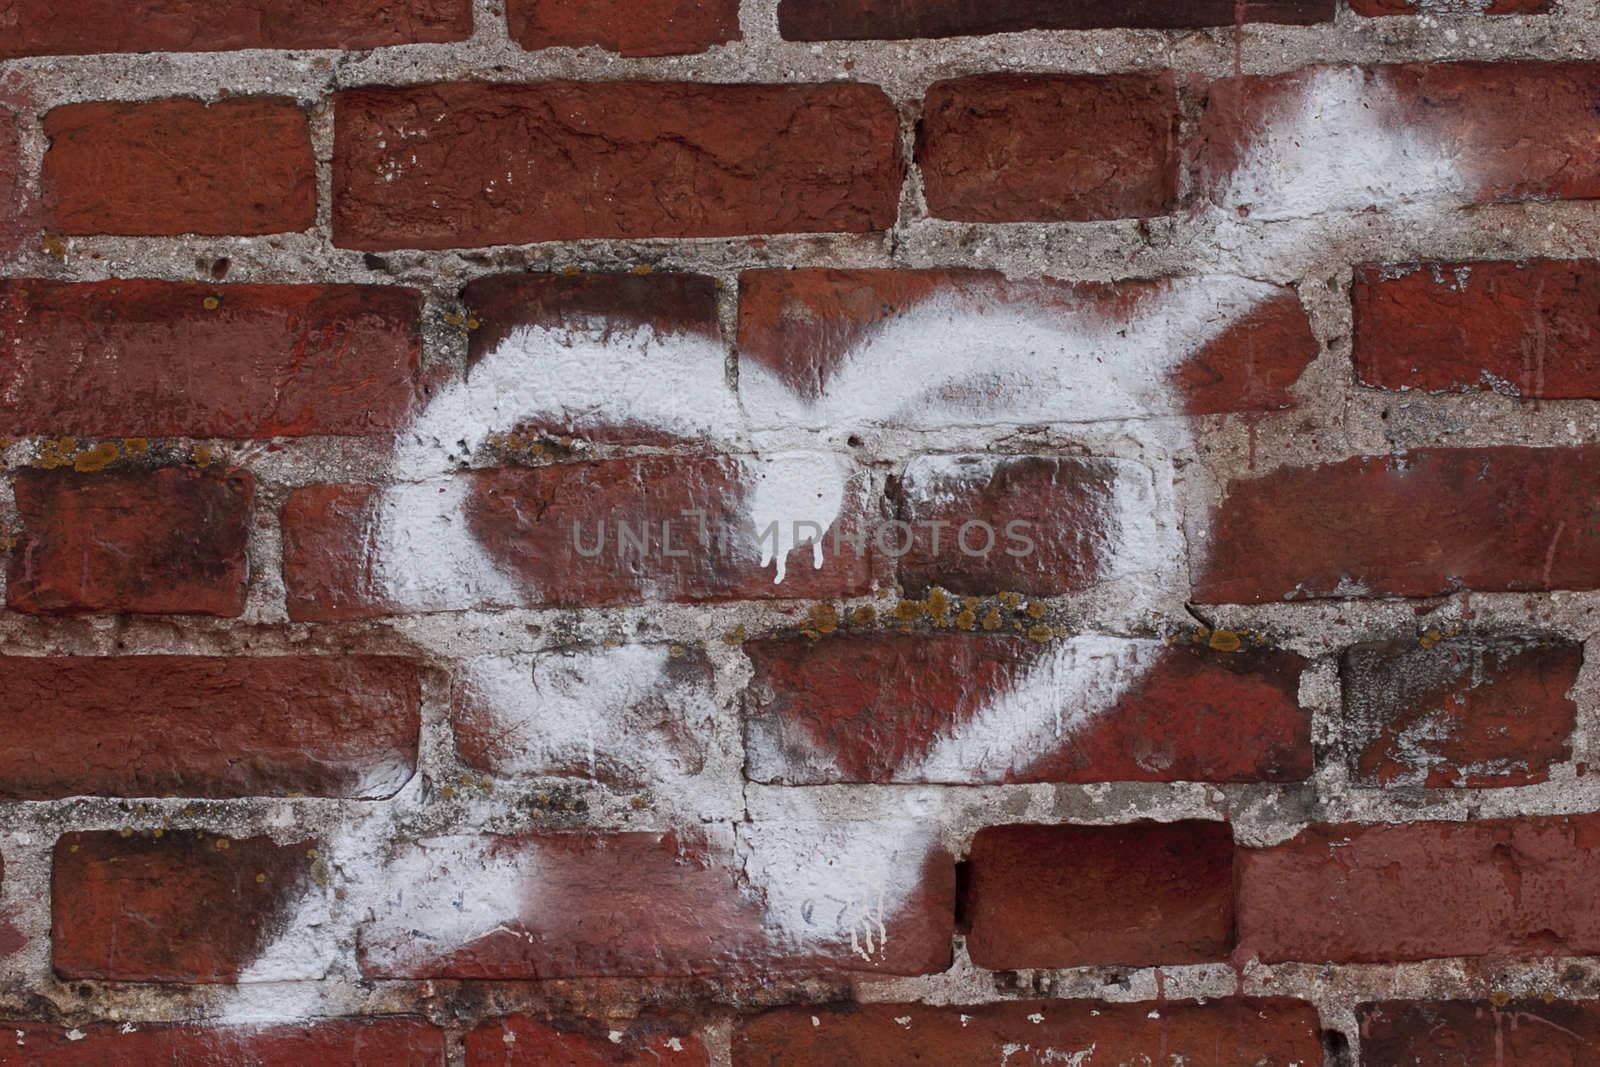 Heart pierced with an arrow drawn on red bricks